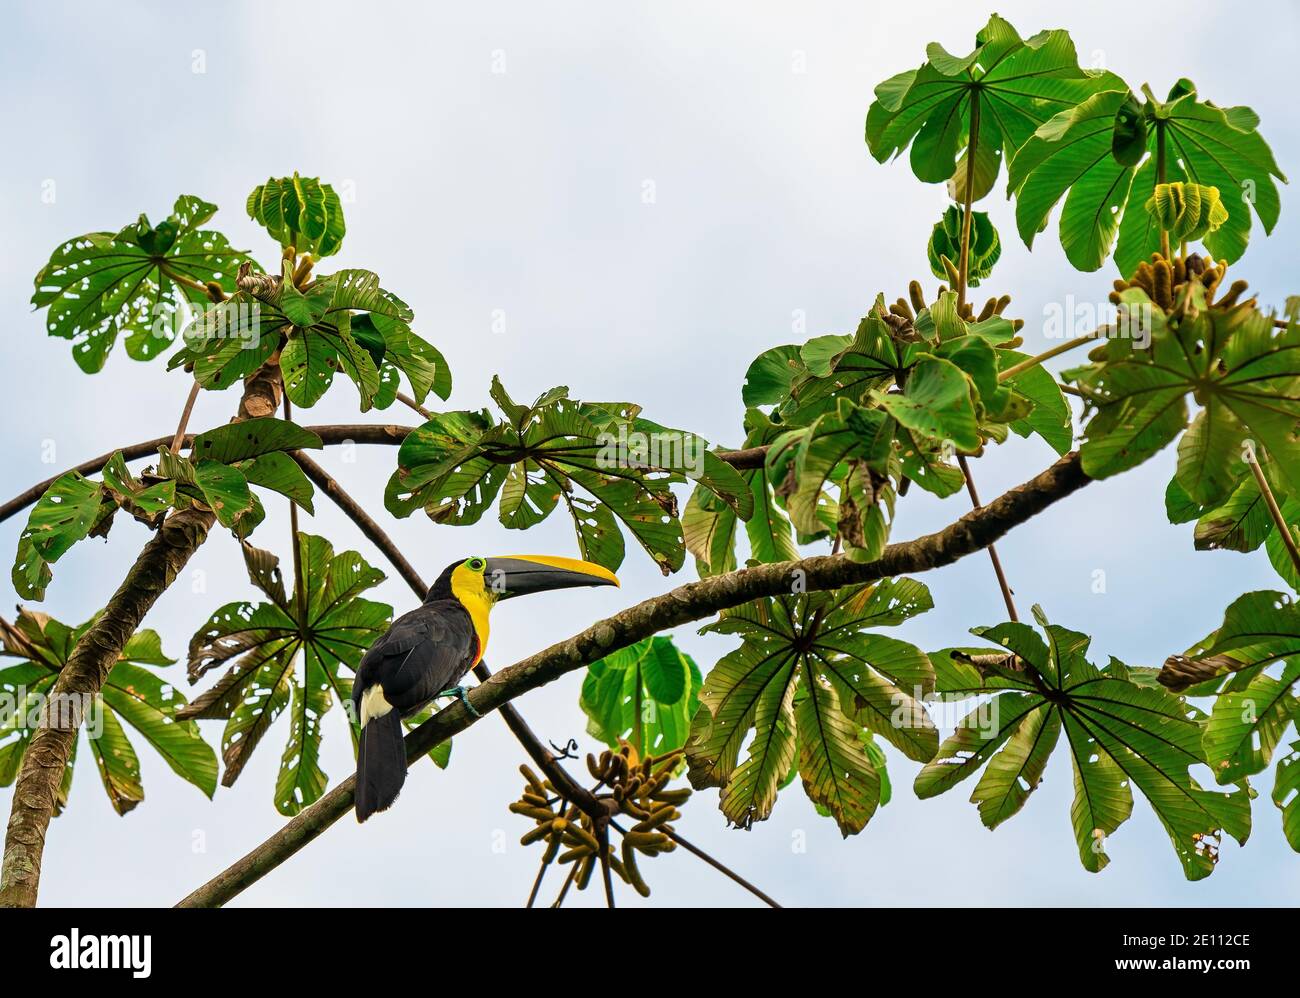 Chestnut Mandibled Toucan or Swainson's Toucan (Ramphastos swainsonii) in Mindo, Ecuador. Stock Photo